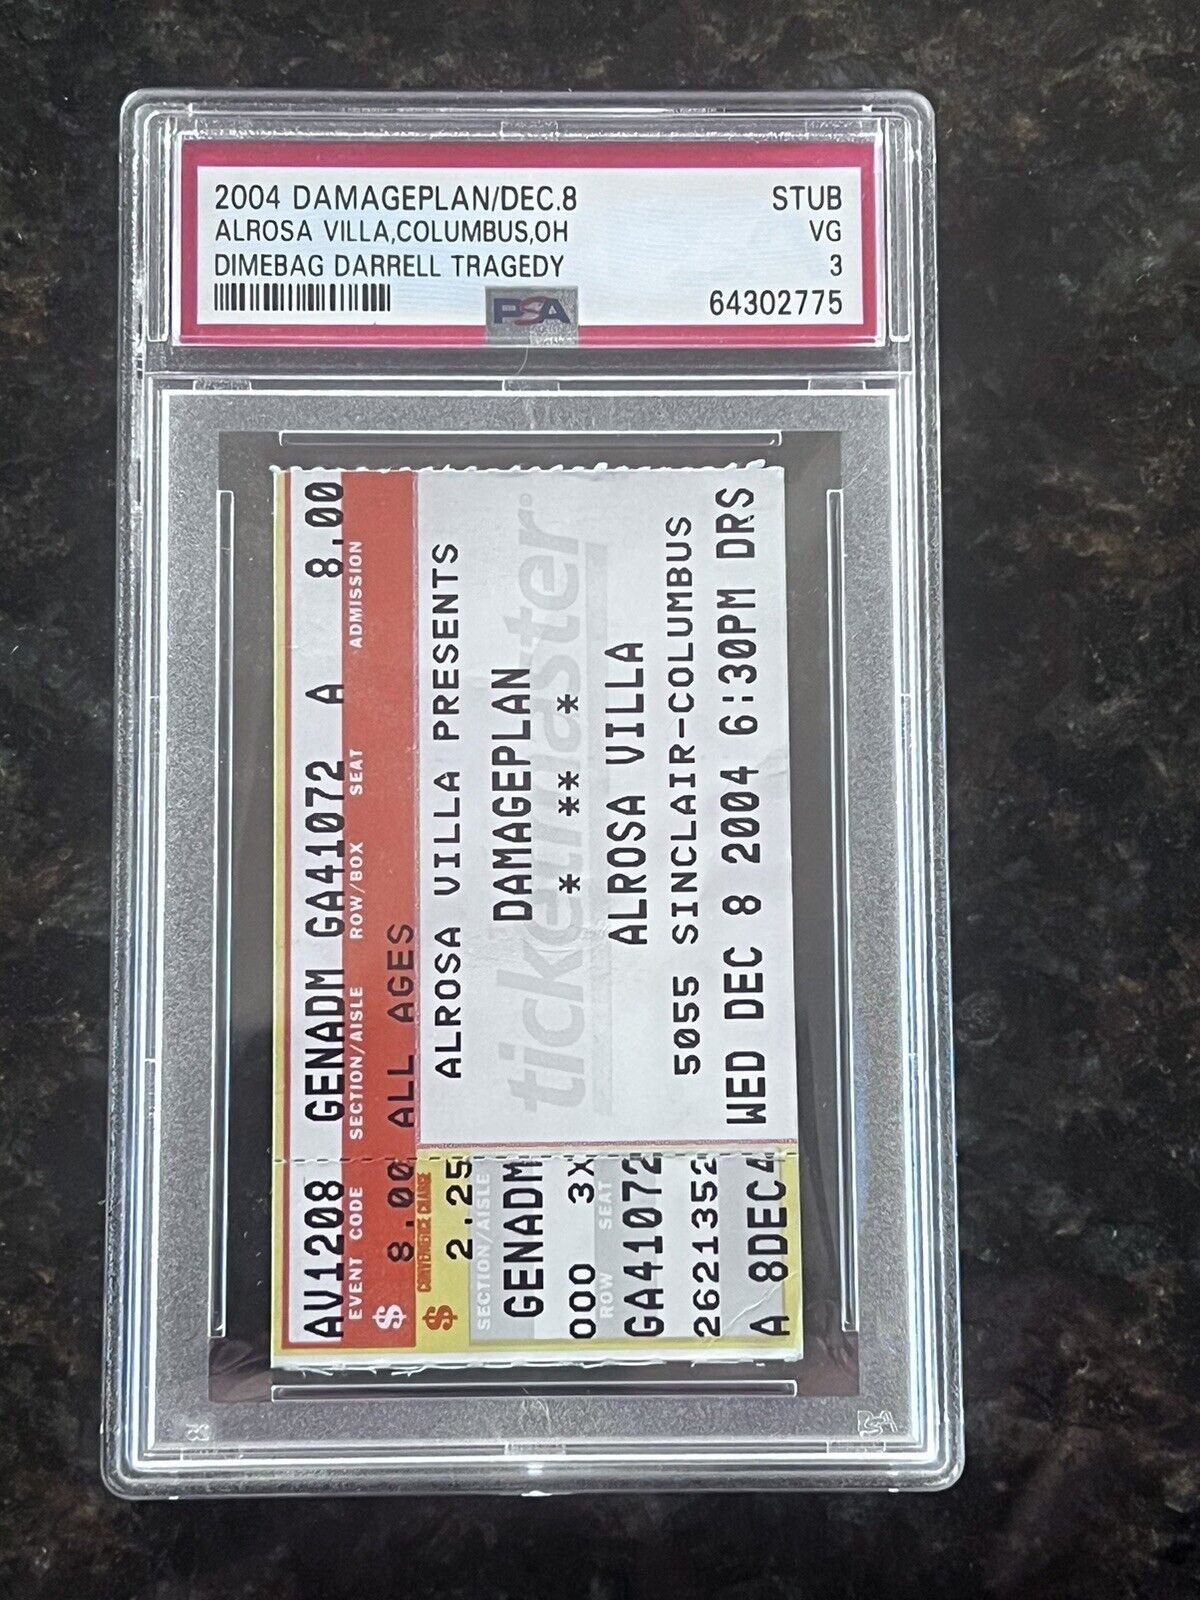 MORBID: Ticket Stub For Dimebag Darrell's Final Show Hits eBay + MORE